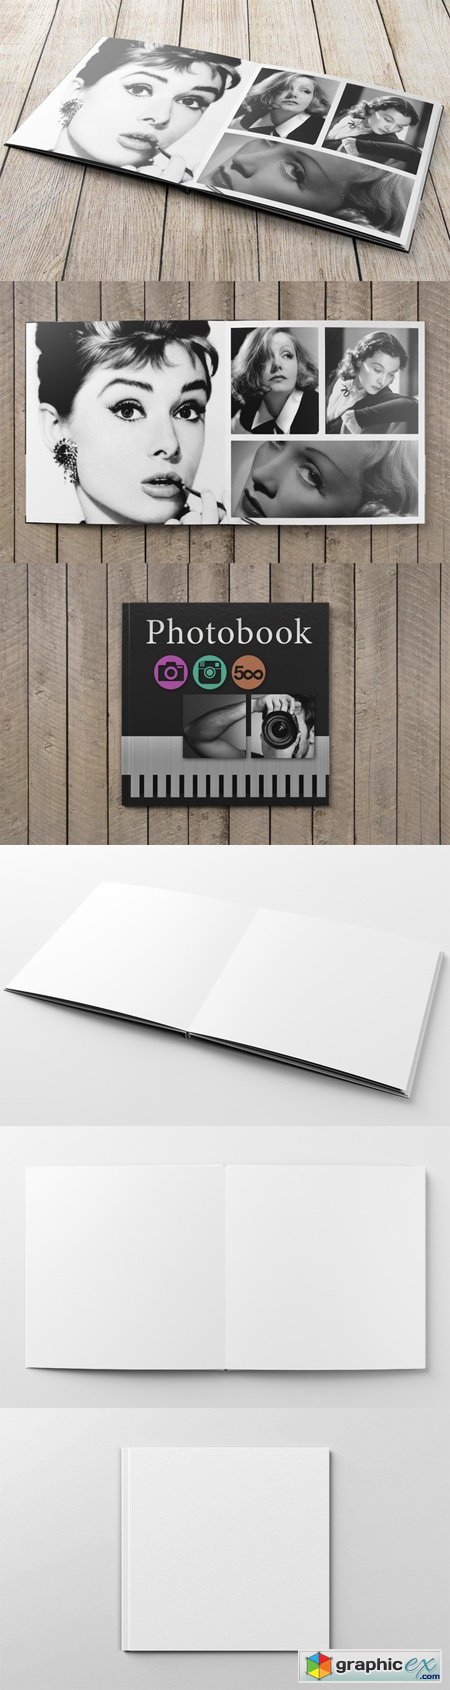 Square Photobook Mock-Up